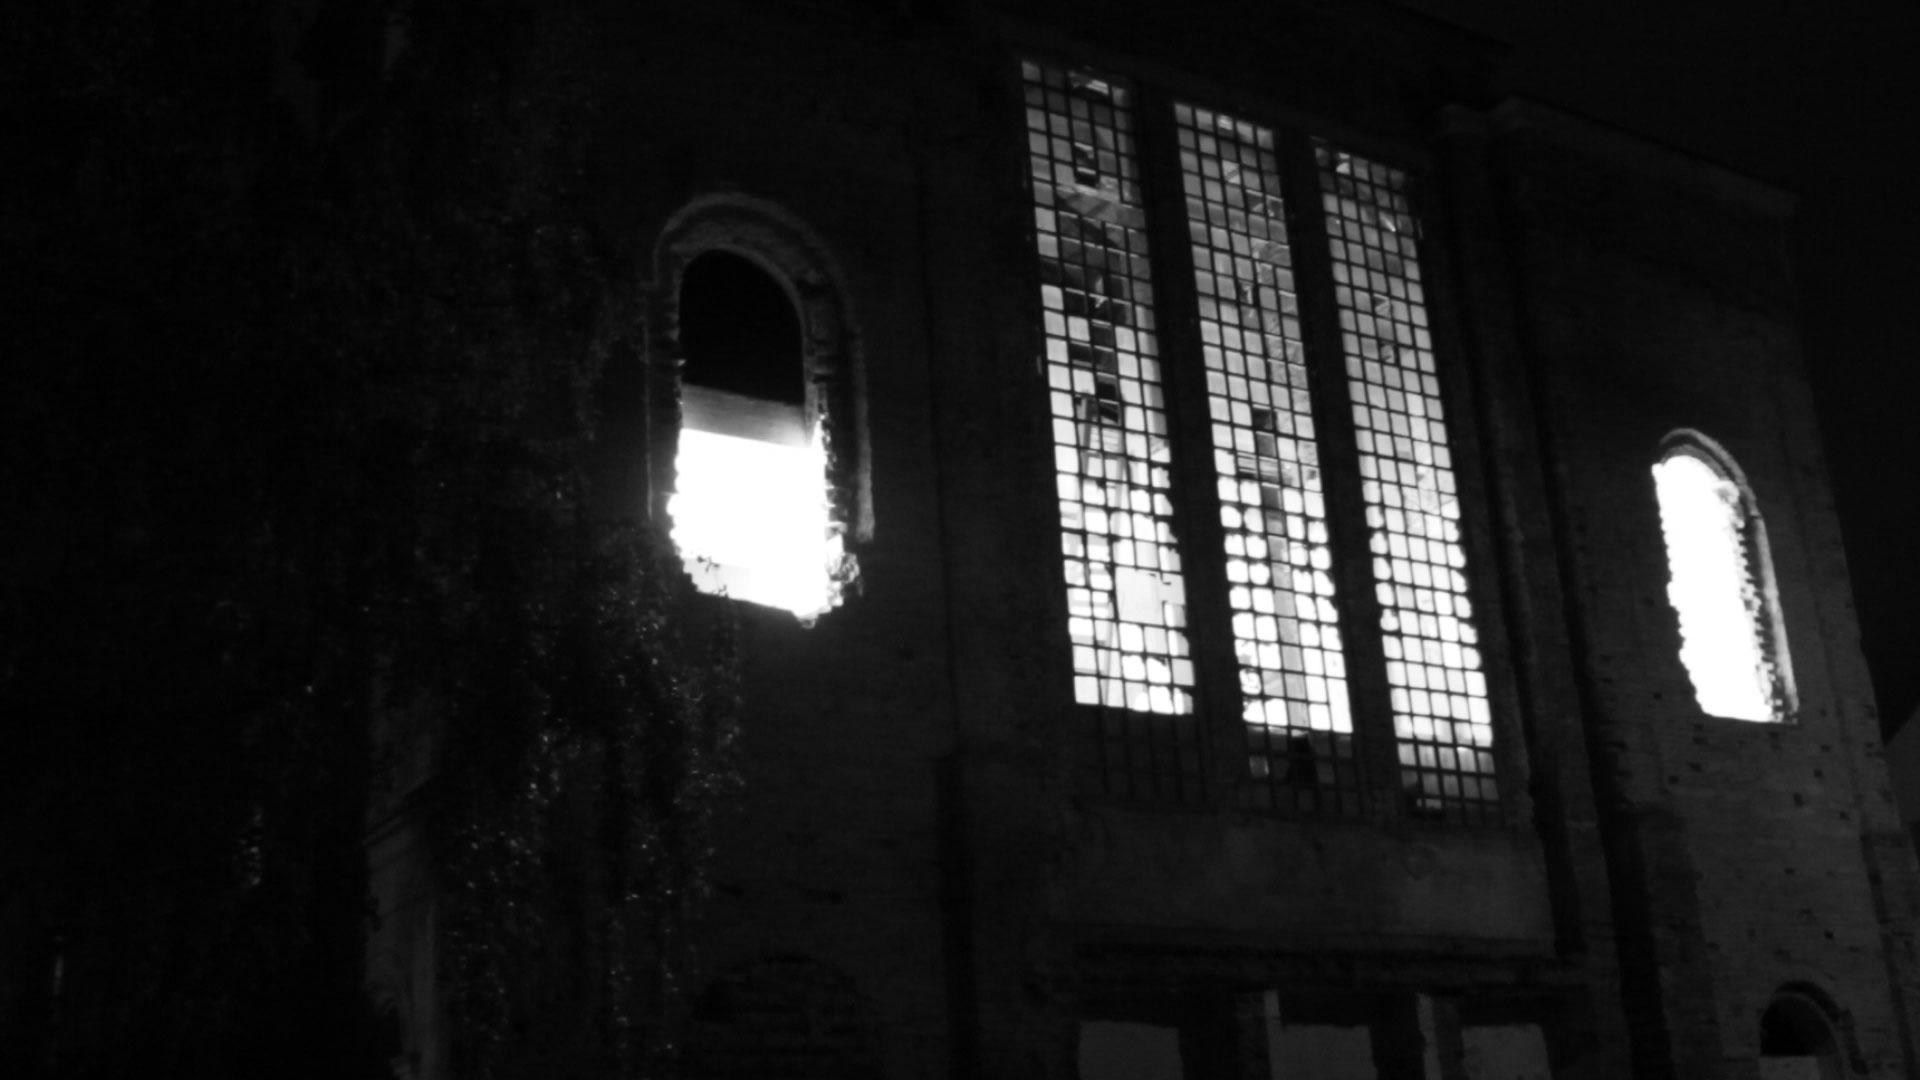 HR-Stamenov, Space 0 Space, 2014, light installation with sound, Varaždin Synagogue